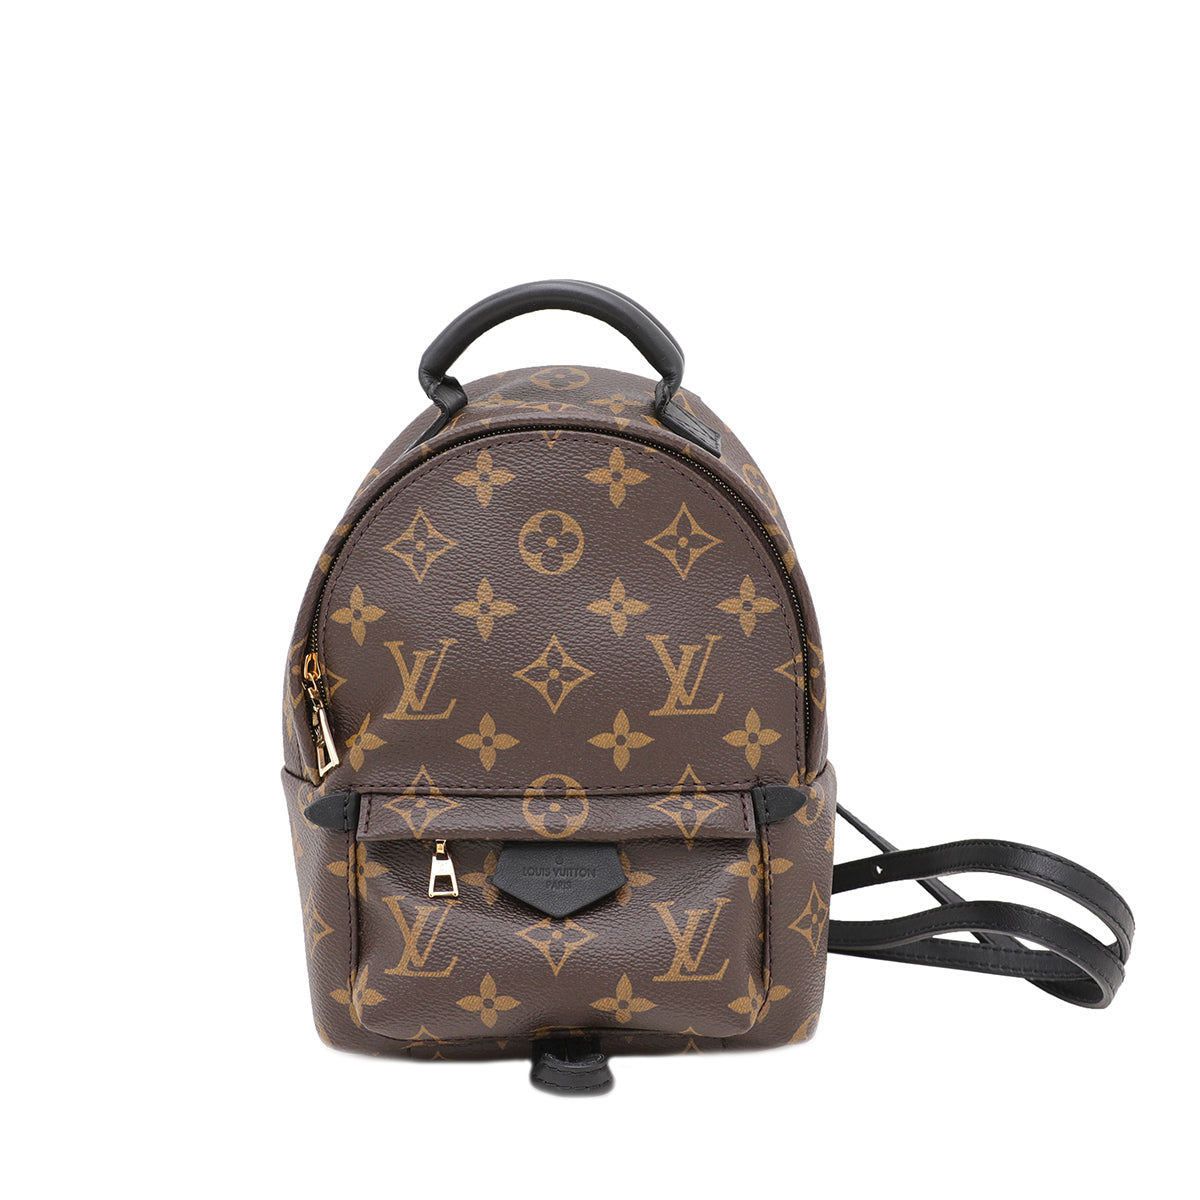 Рюкзак Louis Vuitton Palm Springs Backpack Mini купить в Украине